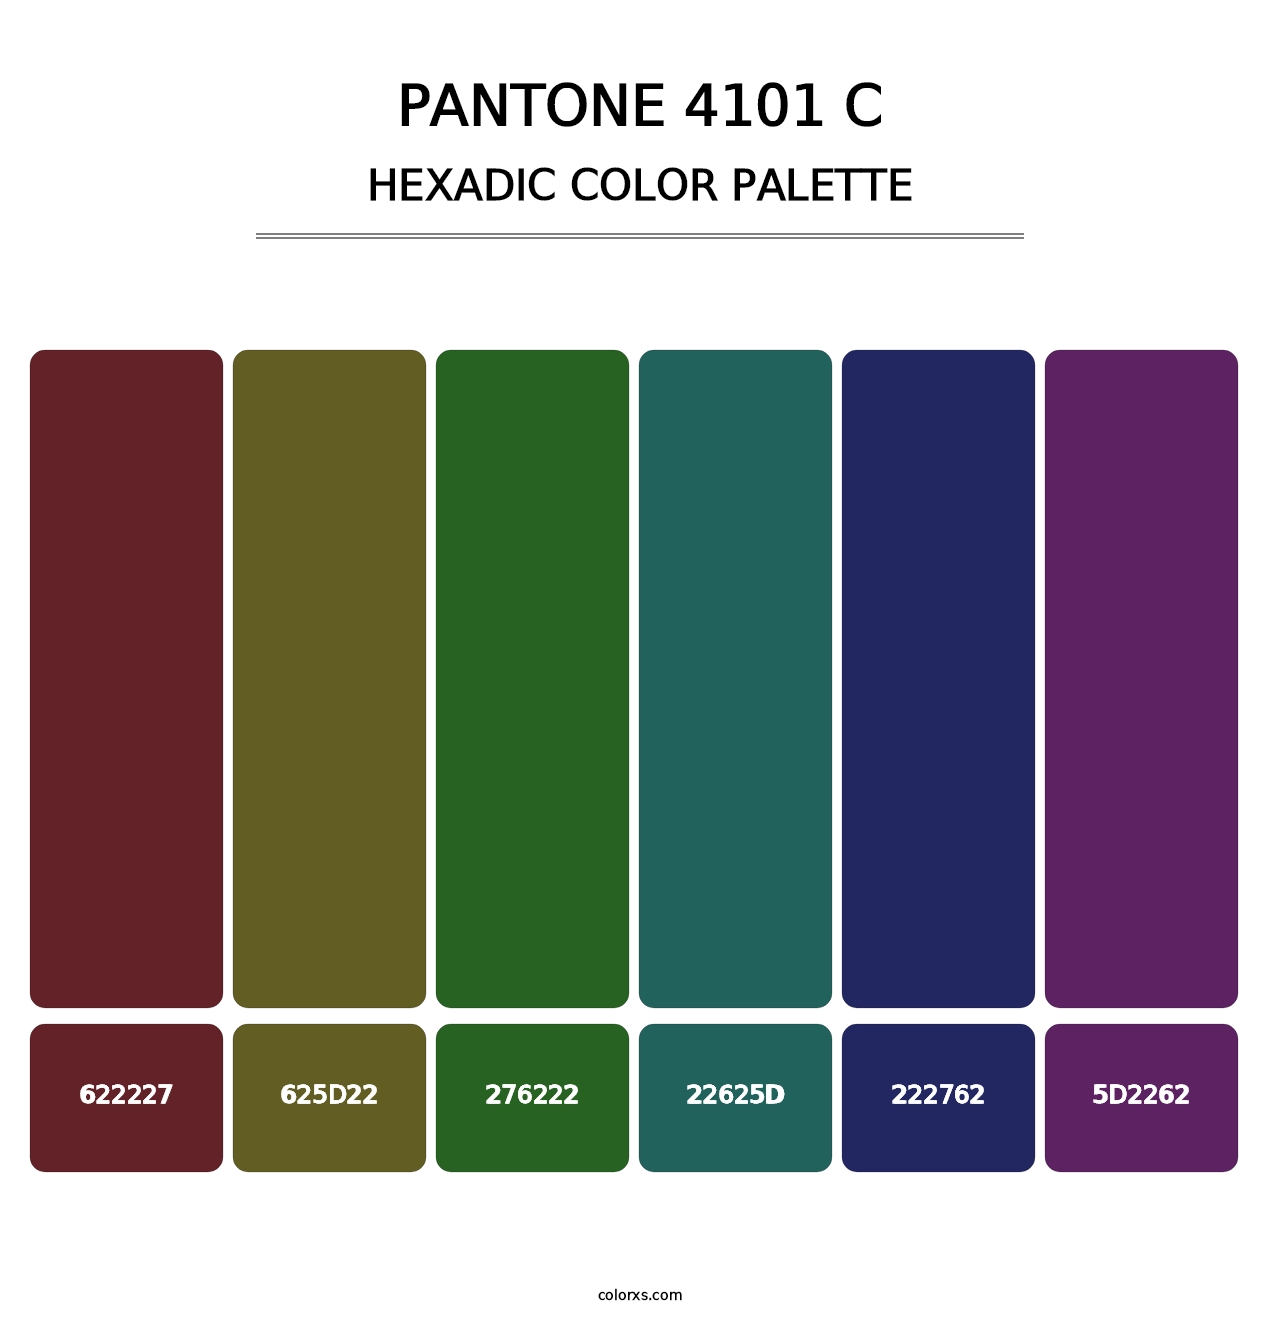 PANTONE 4101 C - Hexadic Color Palette